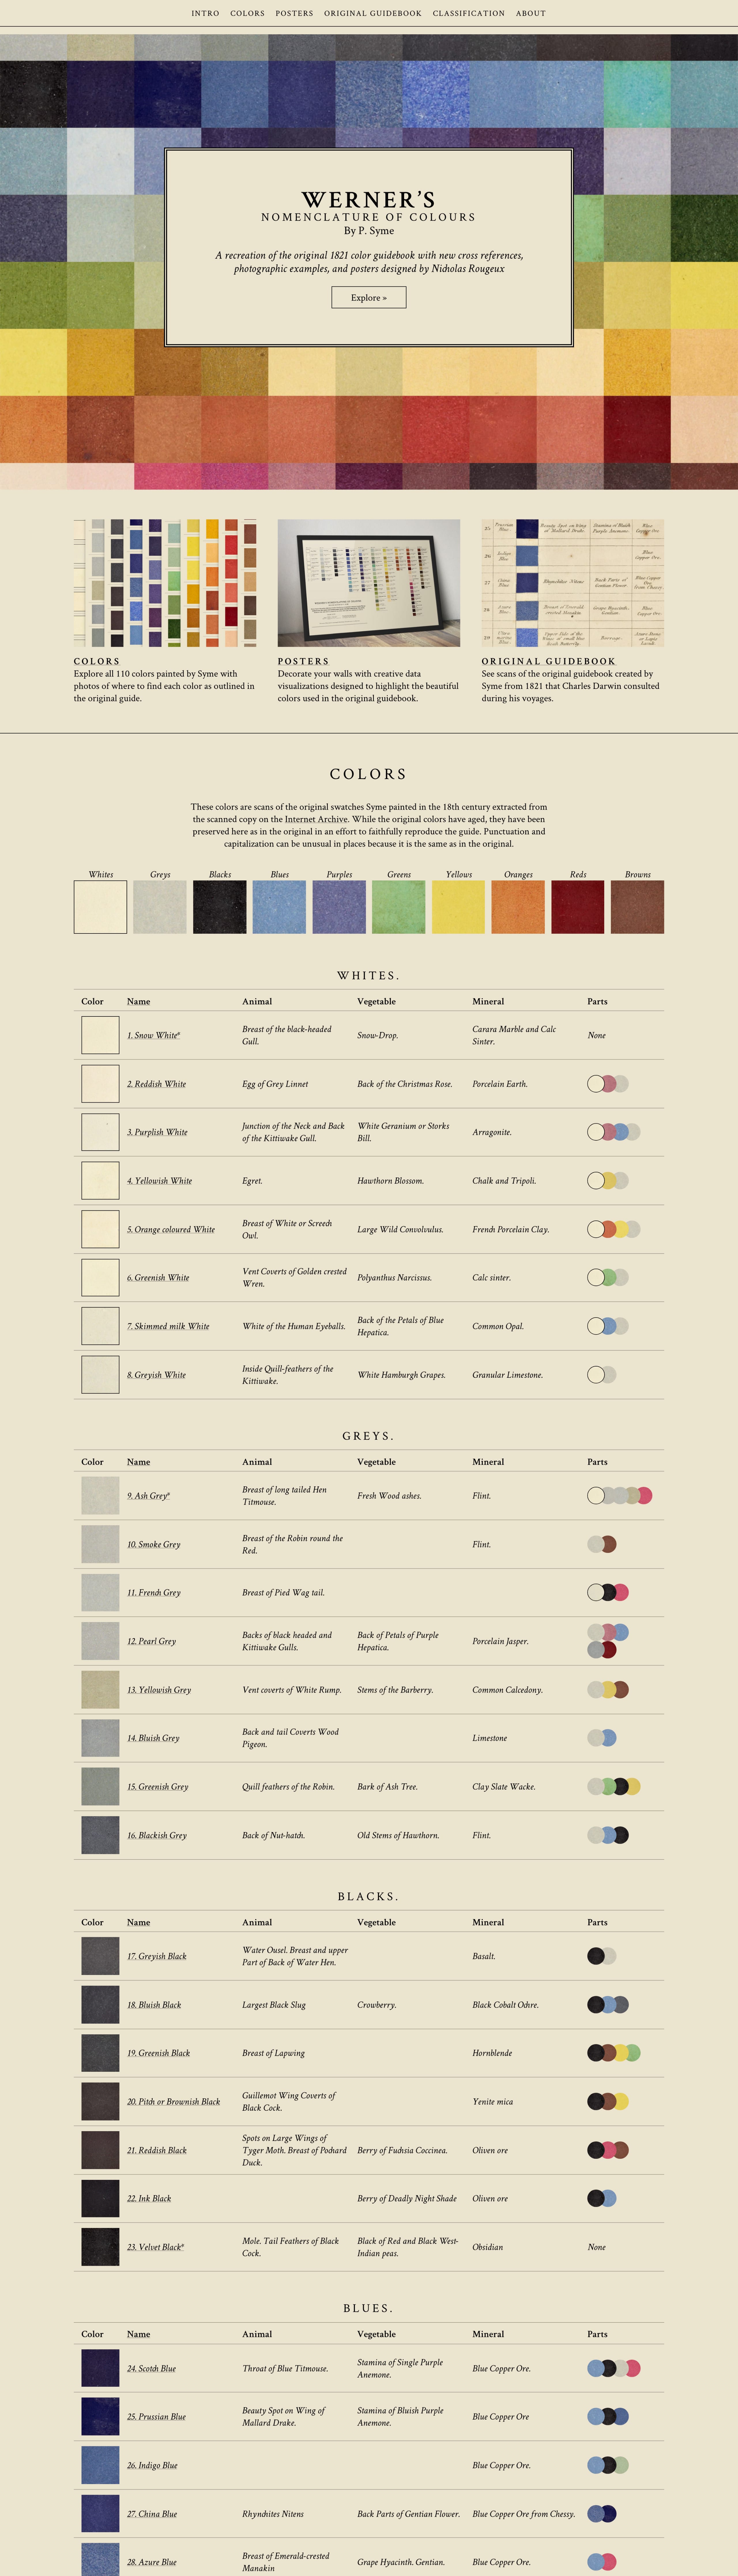 Werner’s Nomenclature of Colours Website Screenshot